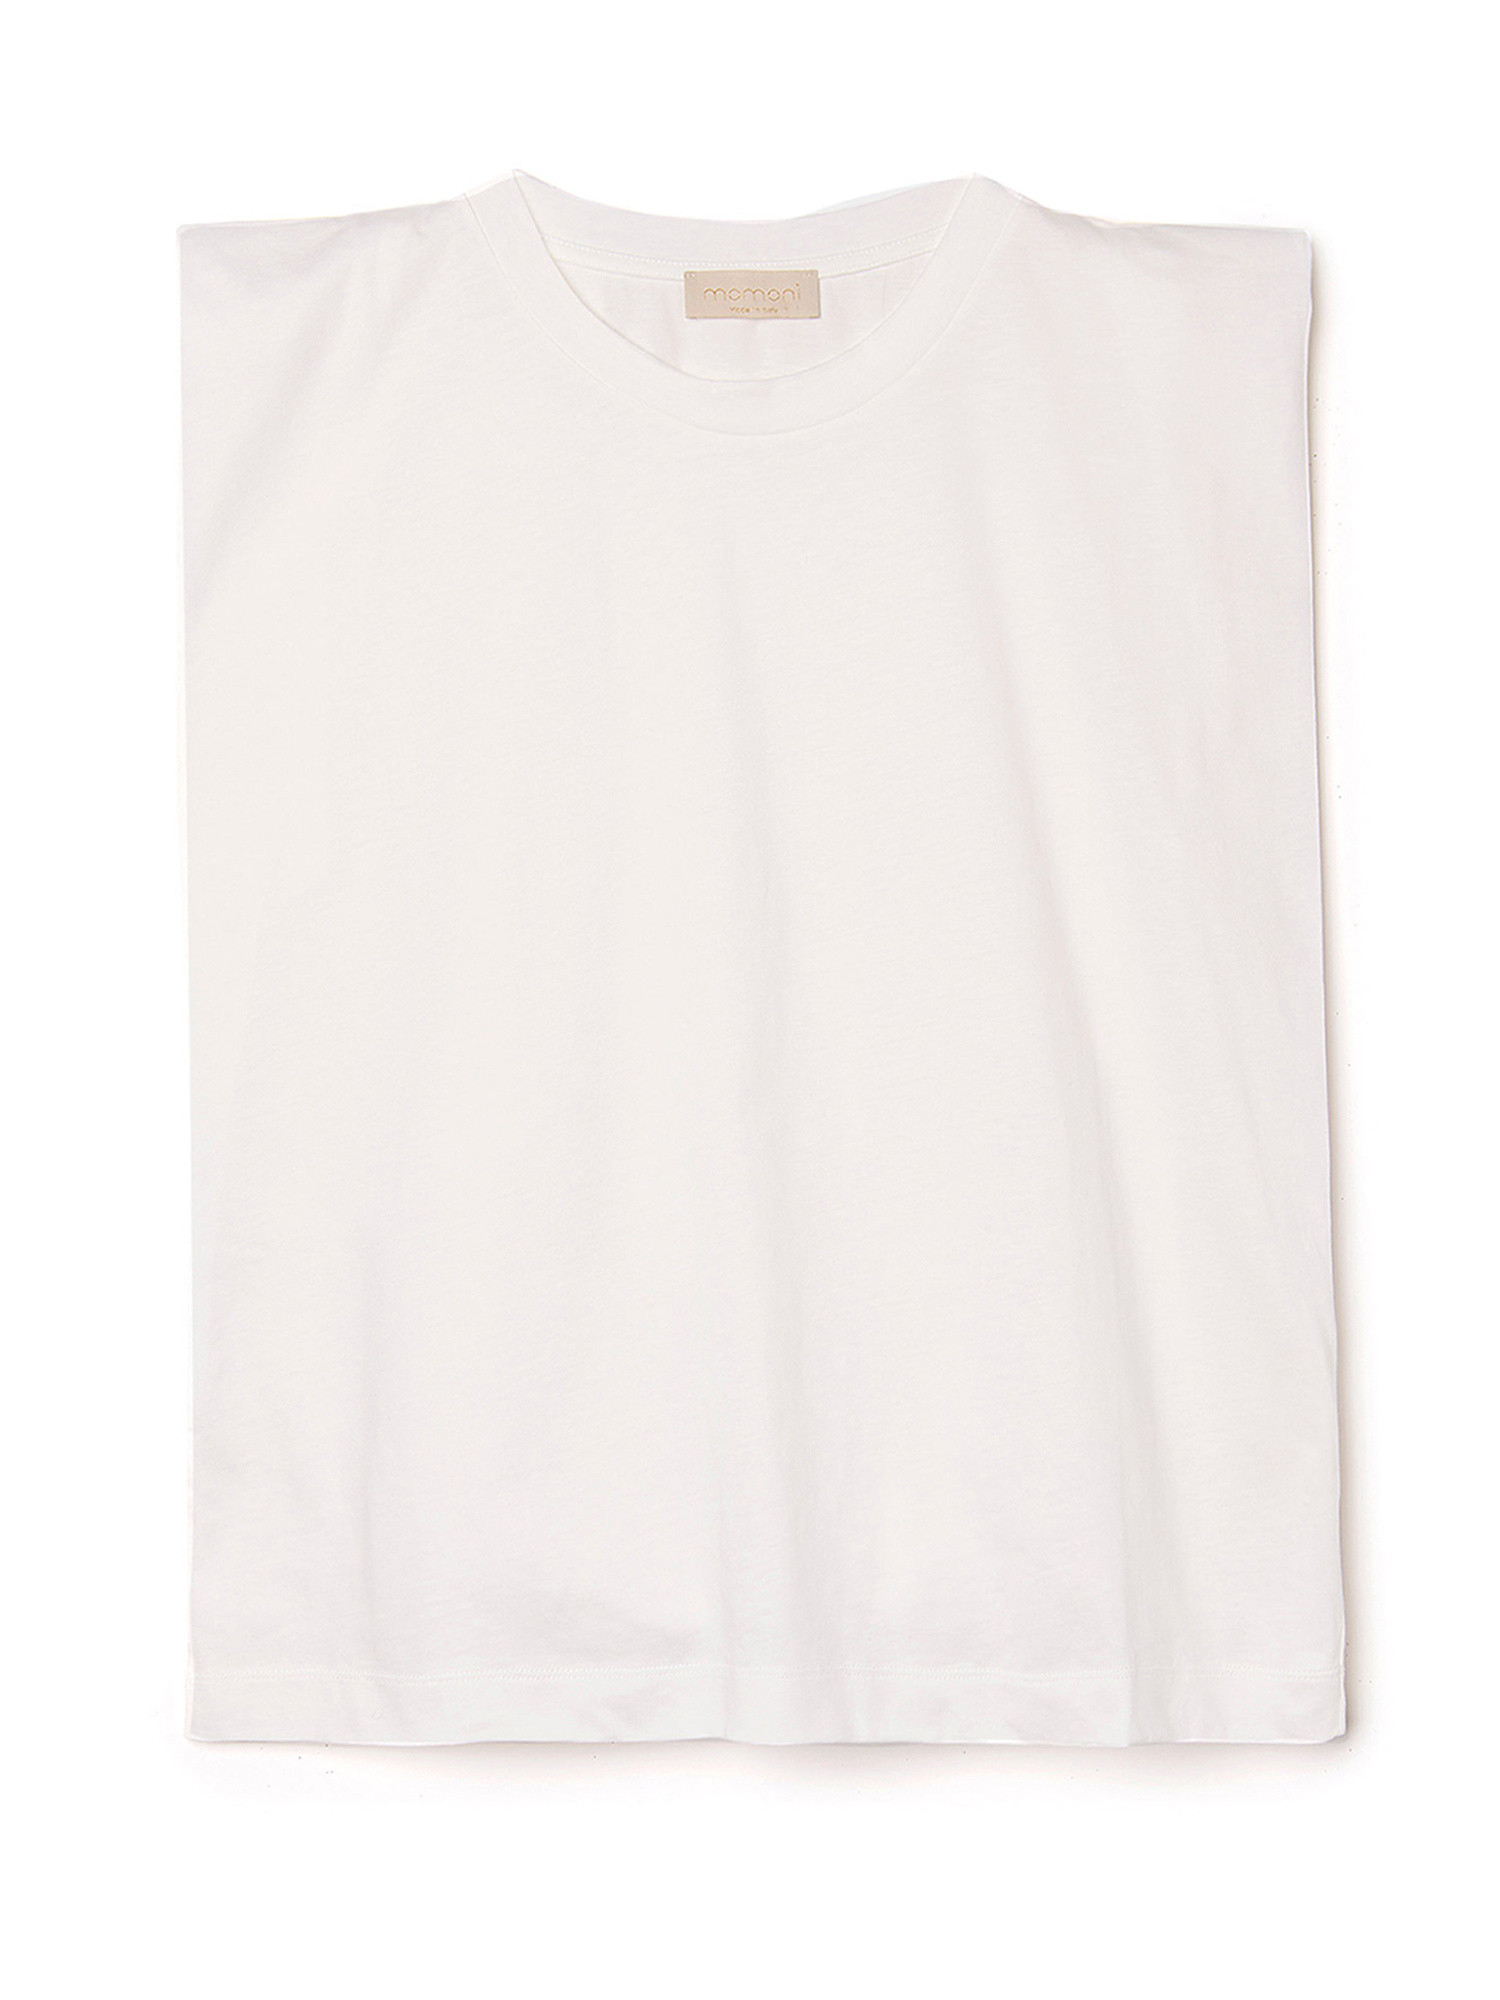 Enna top in silk-crepe blend, White, large image number 0